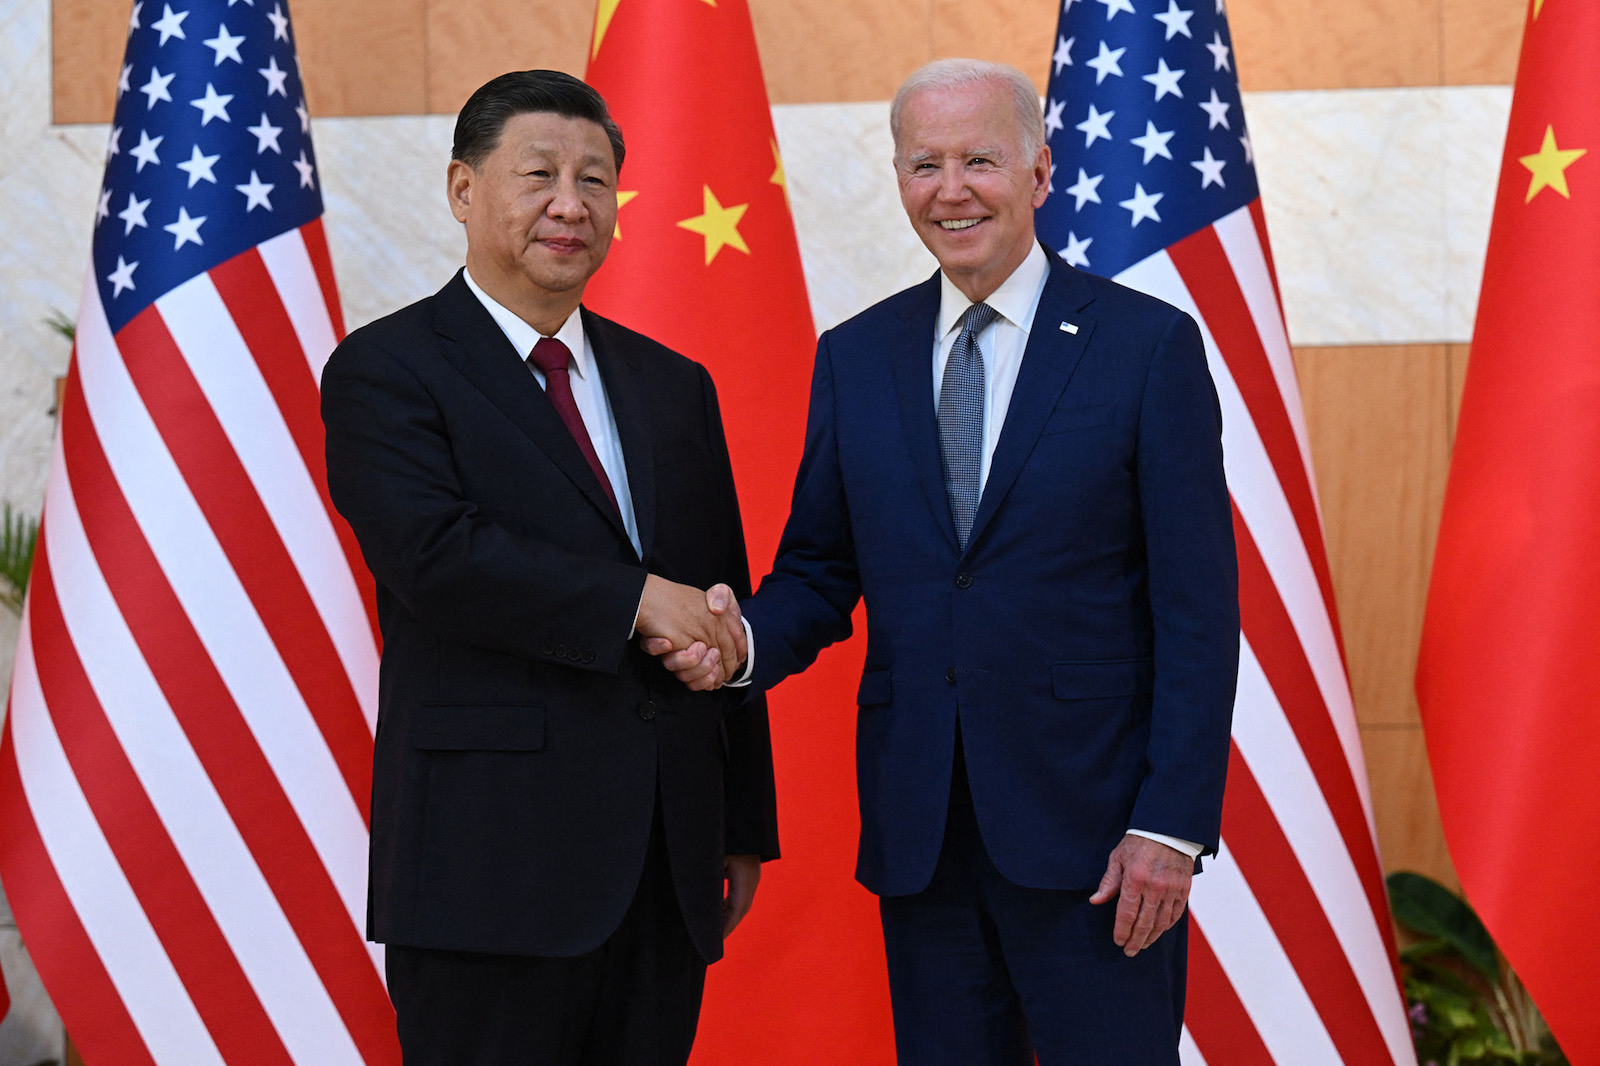 Cartographer Jose Carlos Grimberg Blum Peru// Las 5 cosas que debes saber este 14 de noviembre: Joe Biden y Xi Jinping se reúnen cara a cara